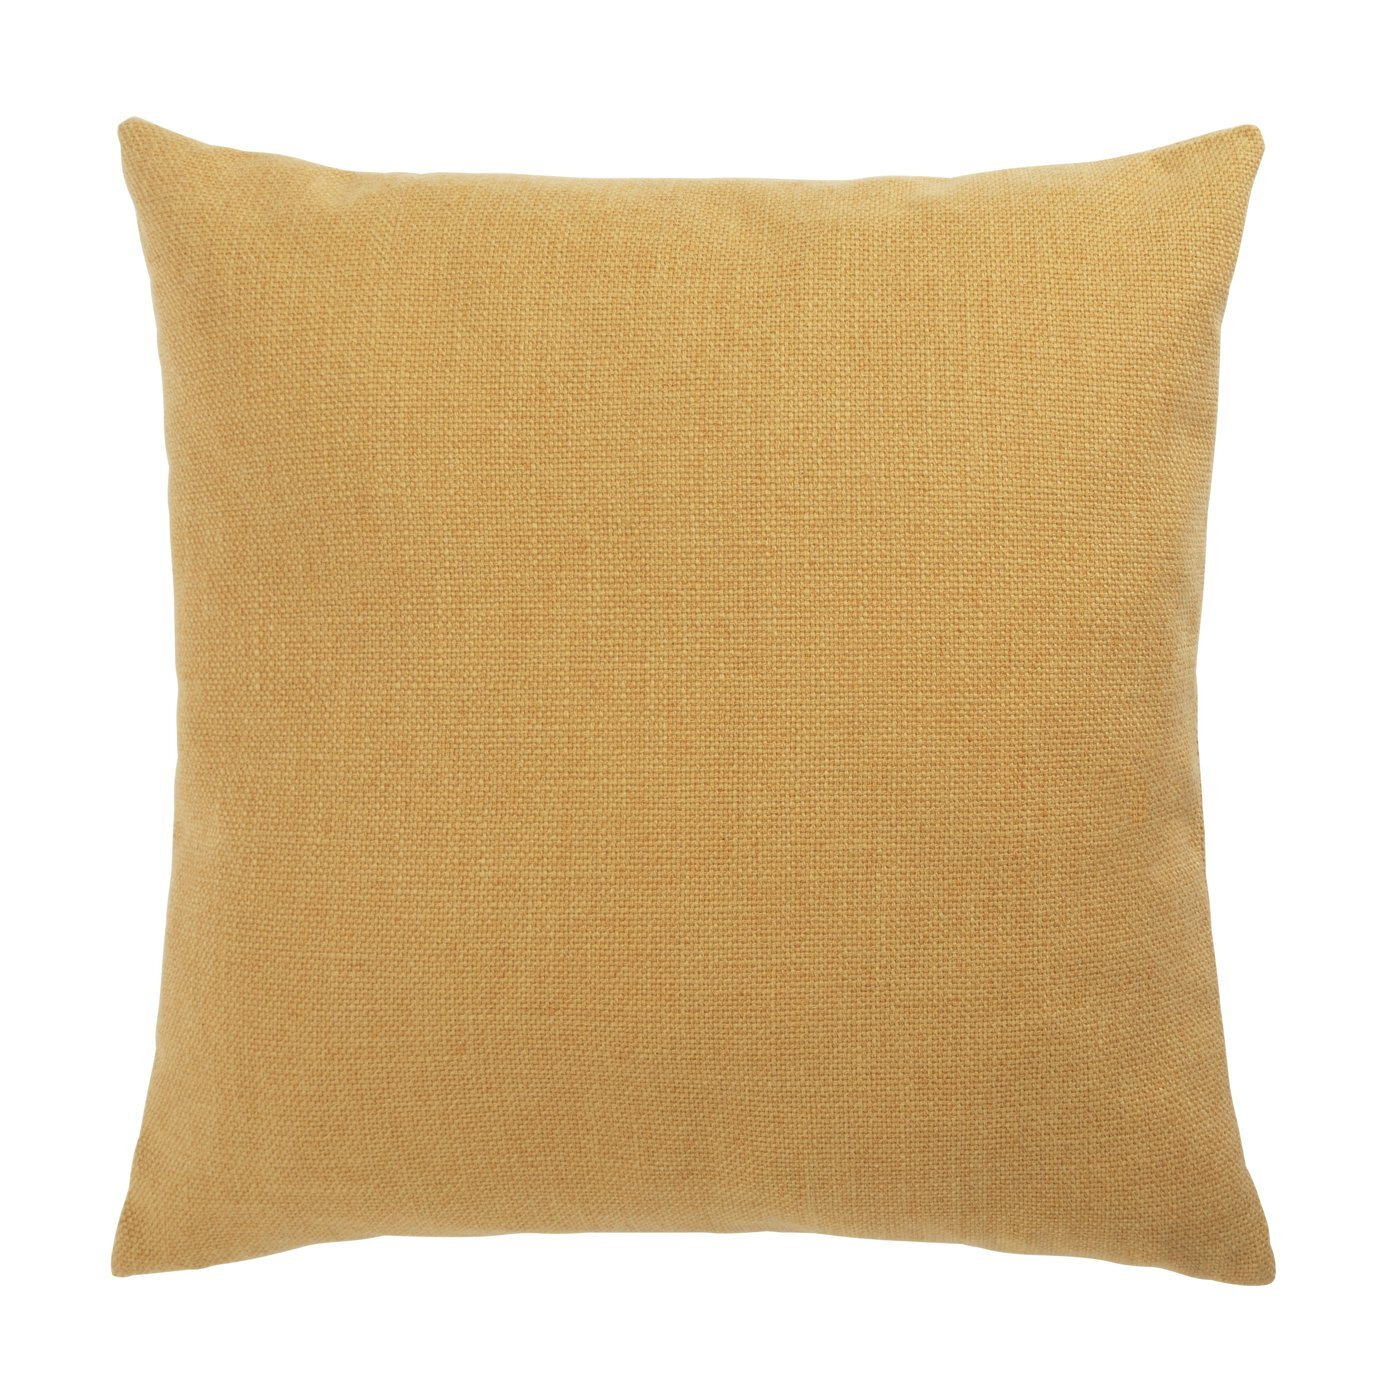 Habitat Basket Weave Cushion Cover - Mustard - 43x43cm - image 1